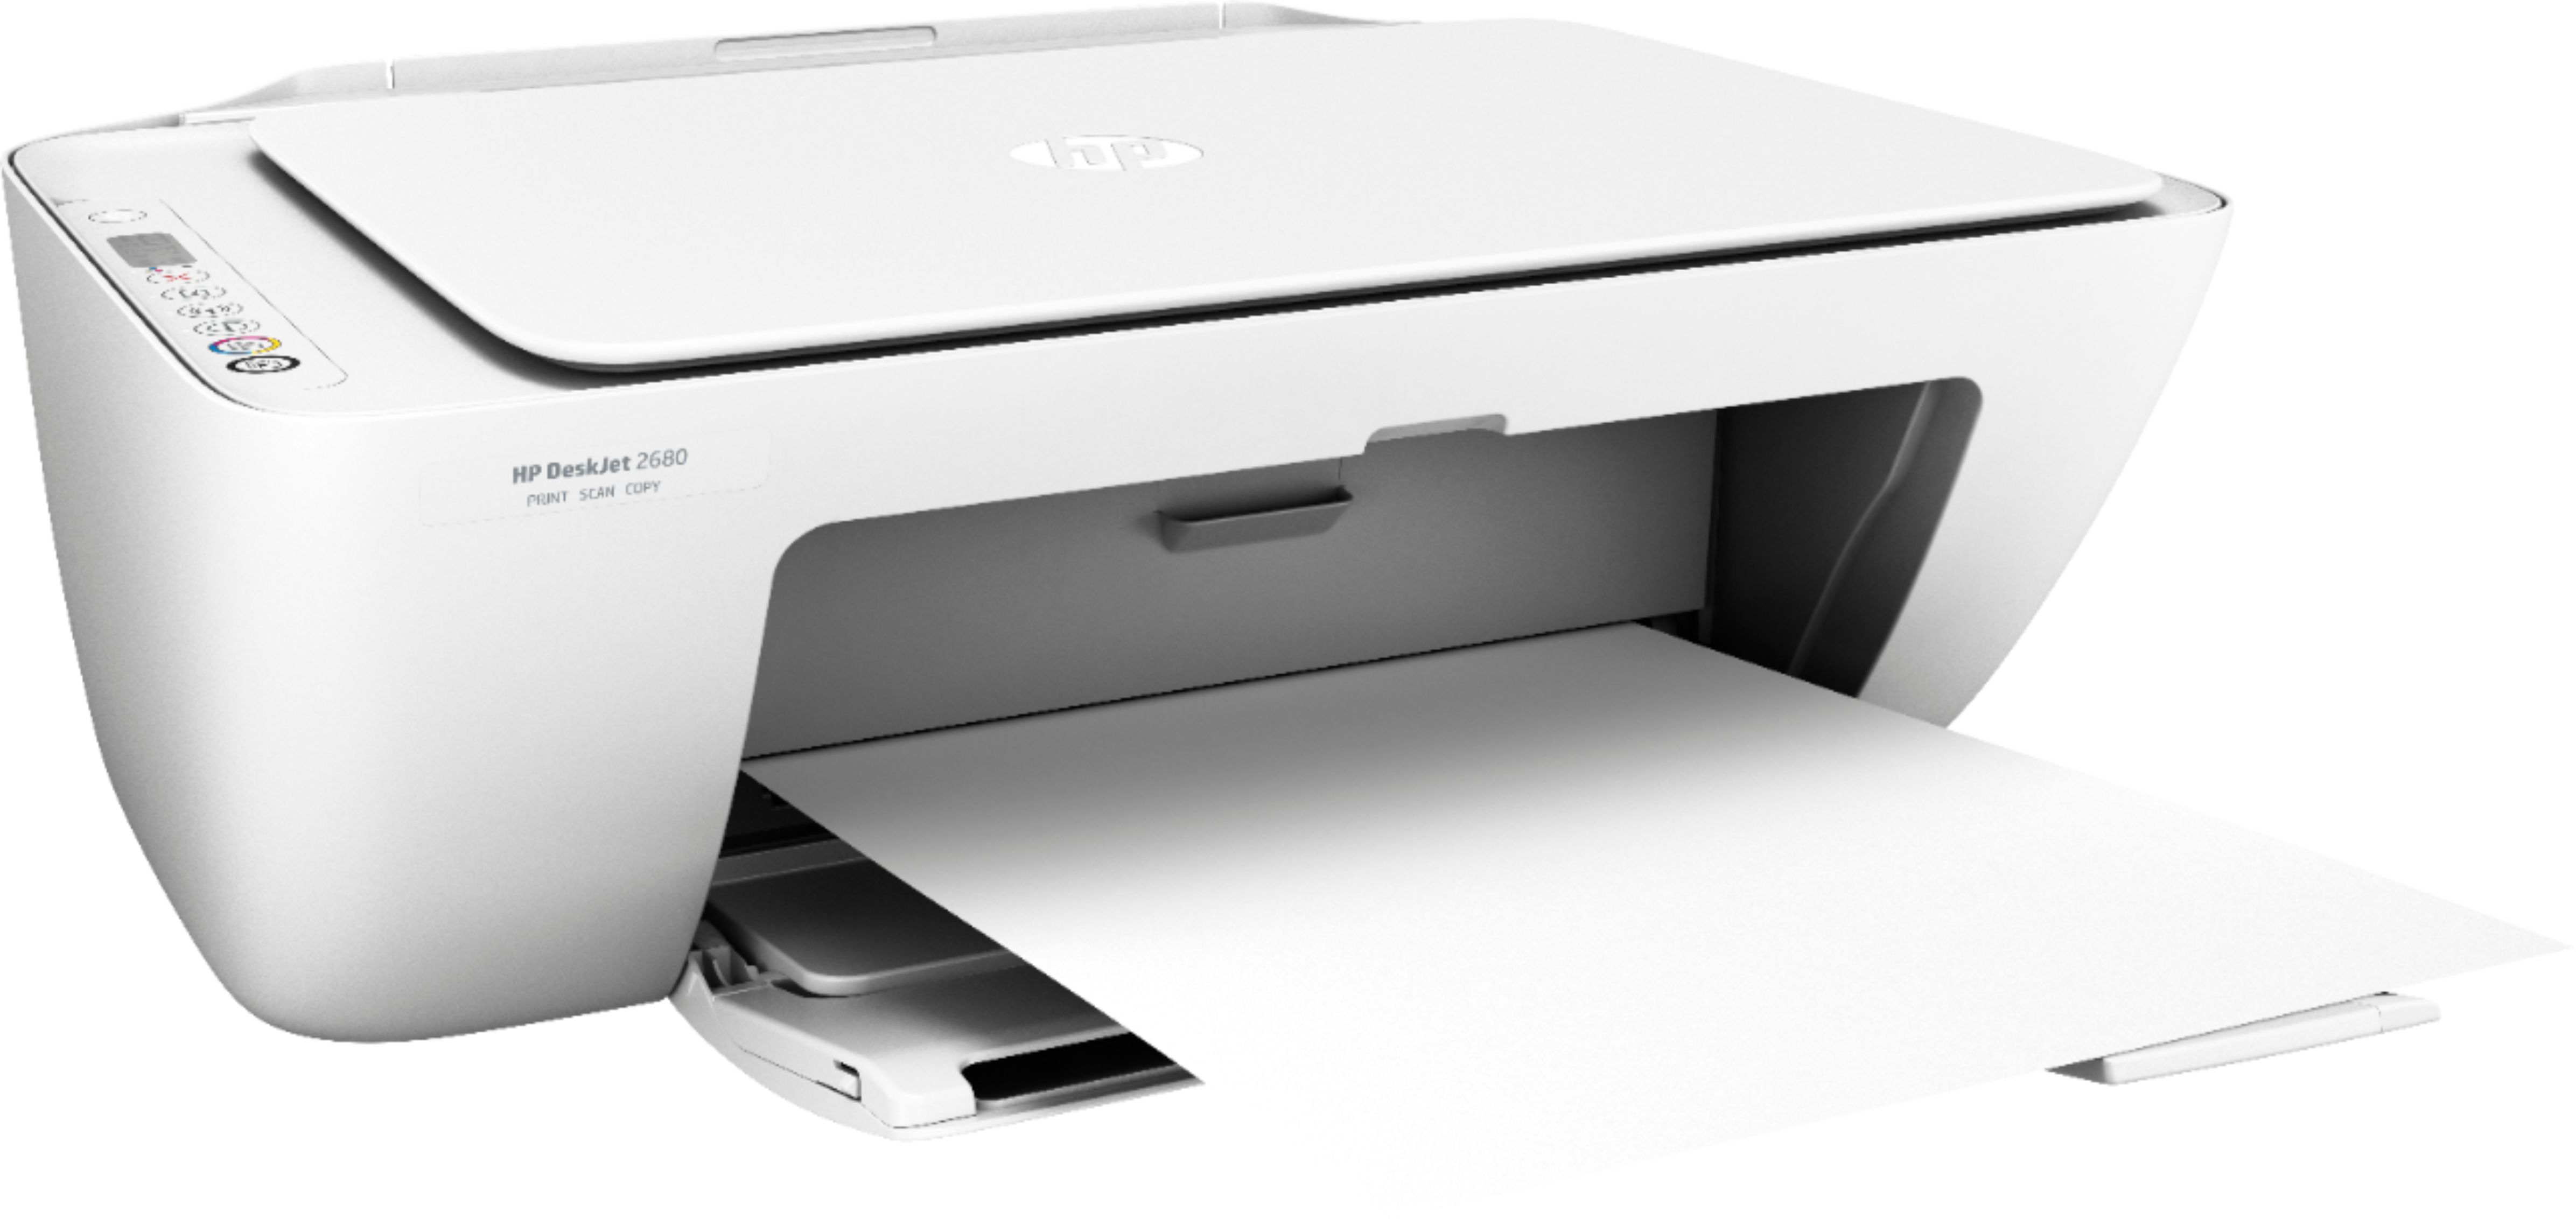 Best Buy Hp Deskjet 2680 Wireless All In One Printer With 10 Of